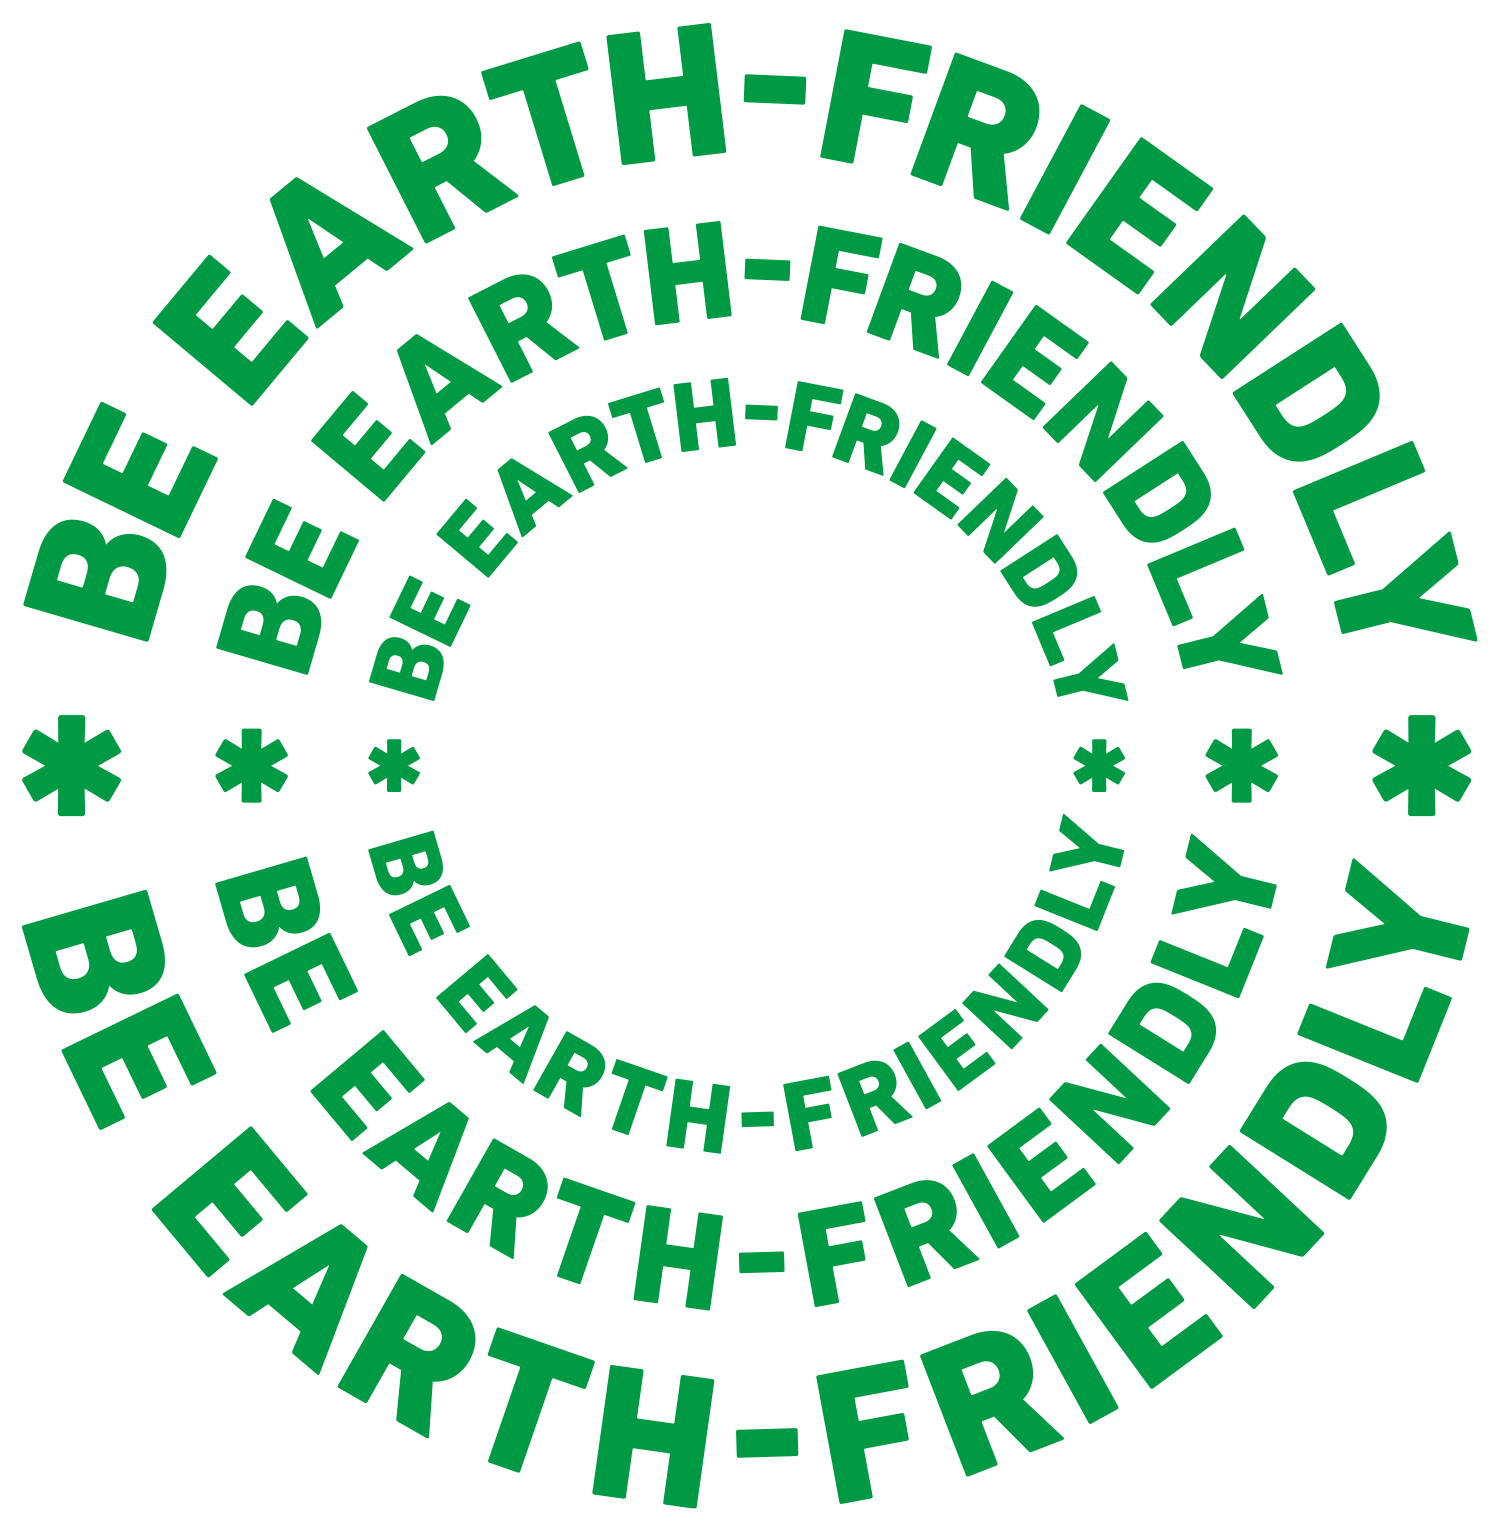 BE EARTH-FRIENDRY